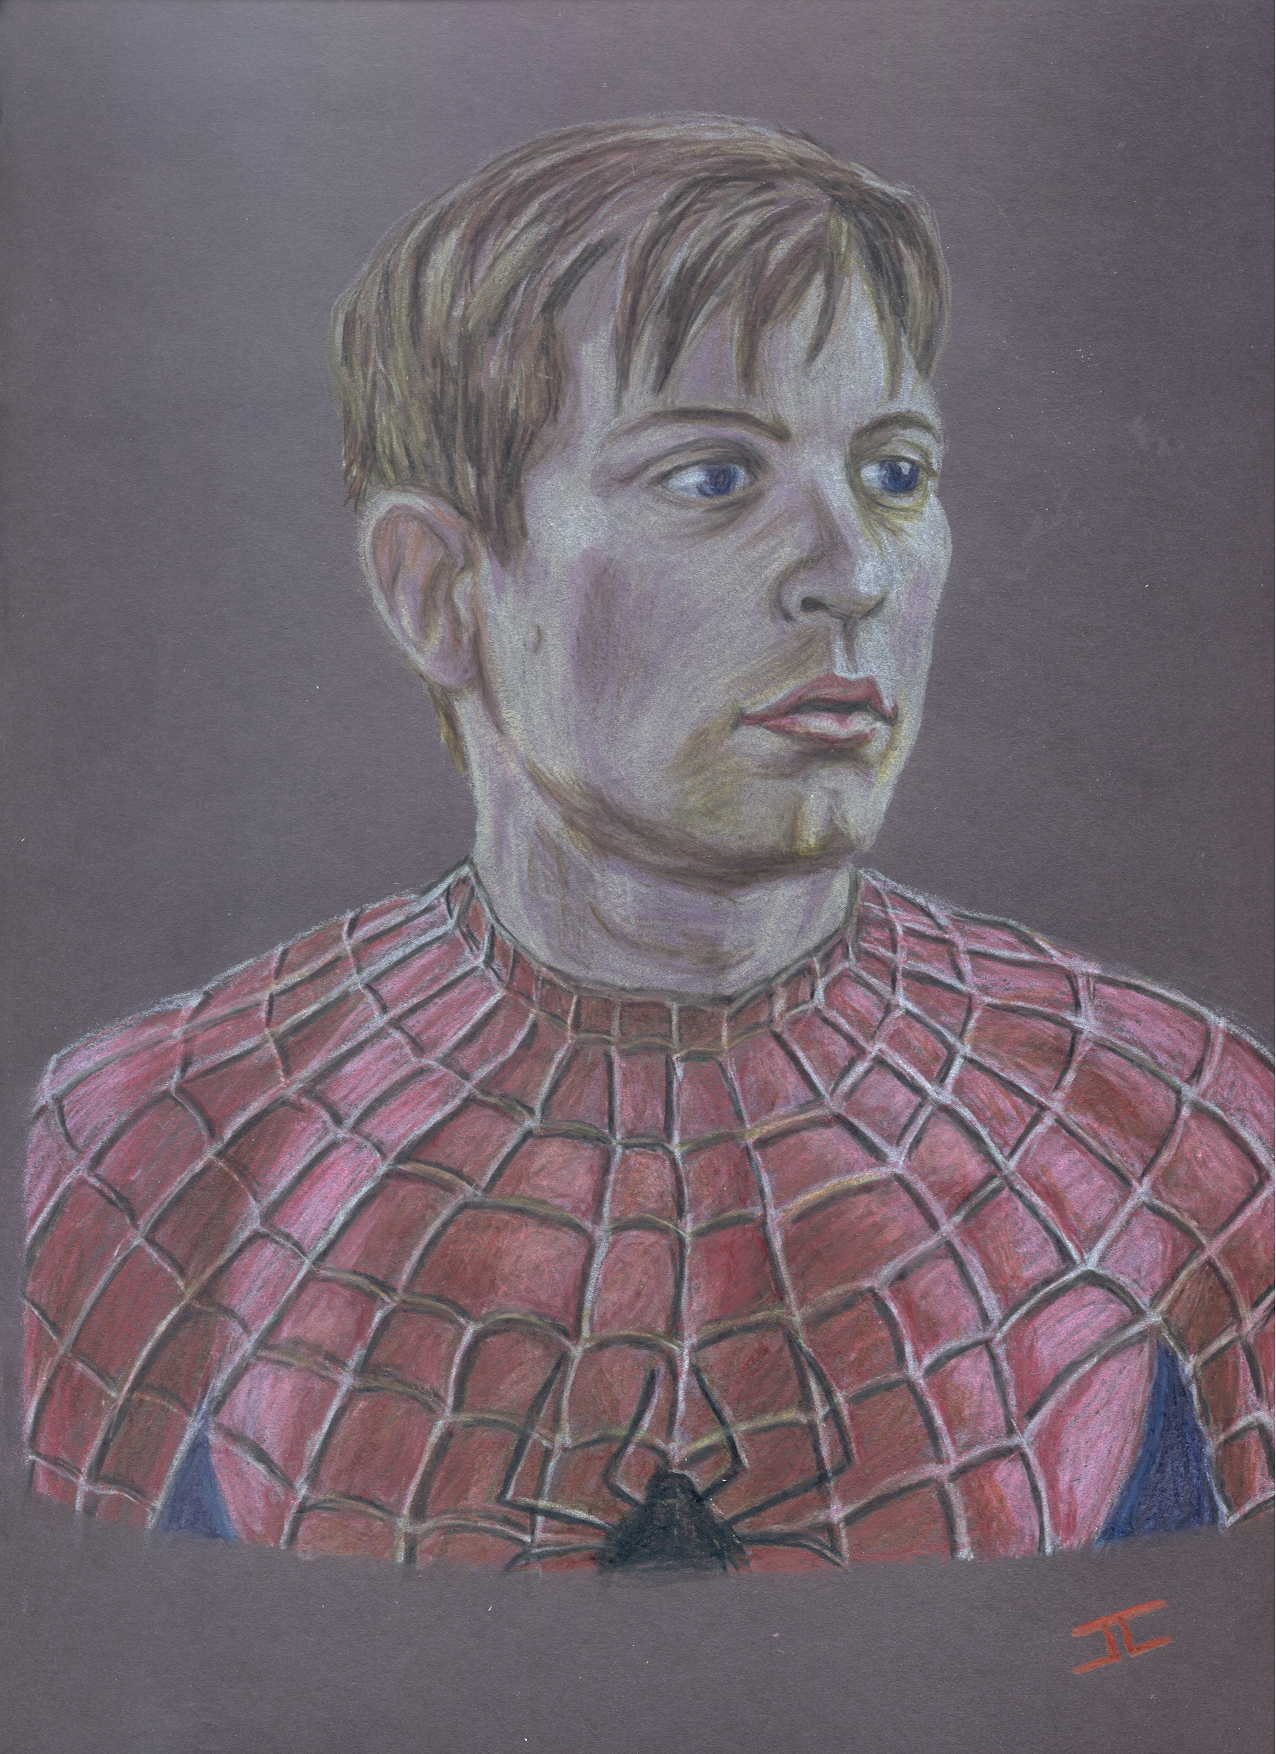 Peter Parker/Spider-man by JAYCEE